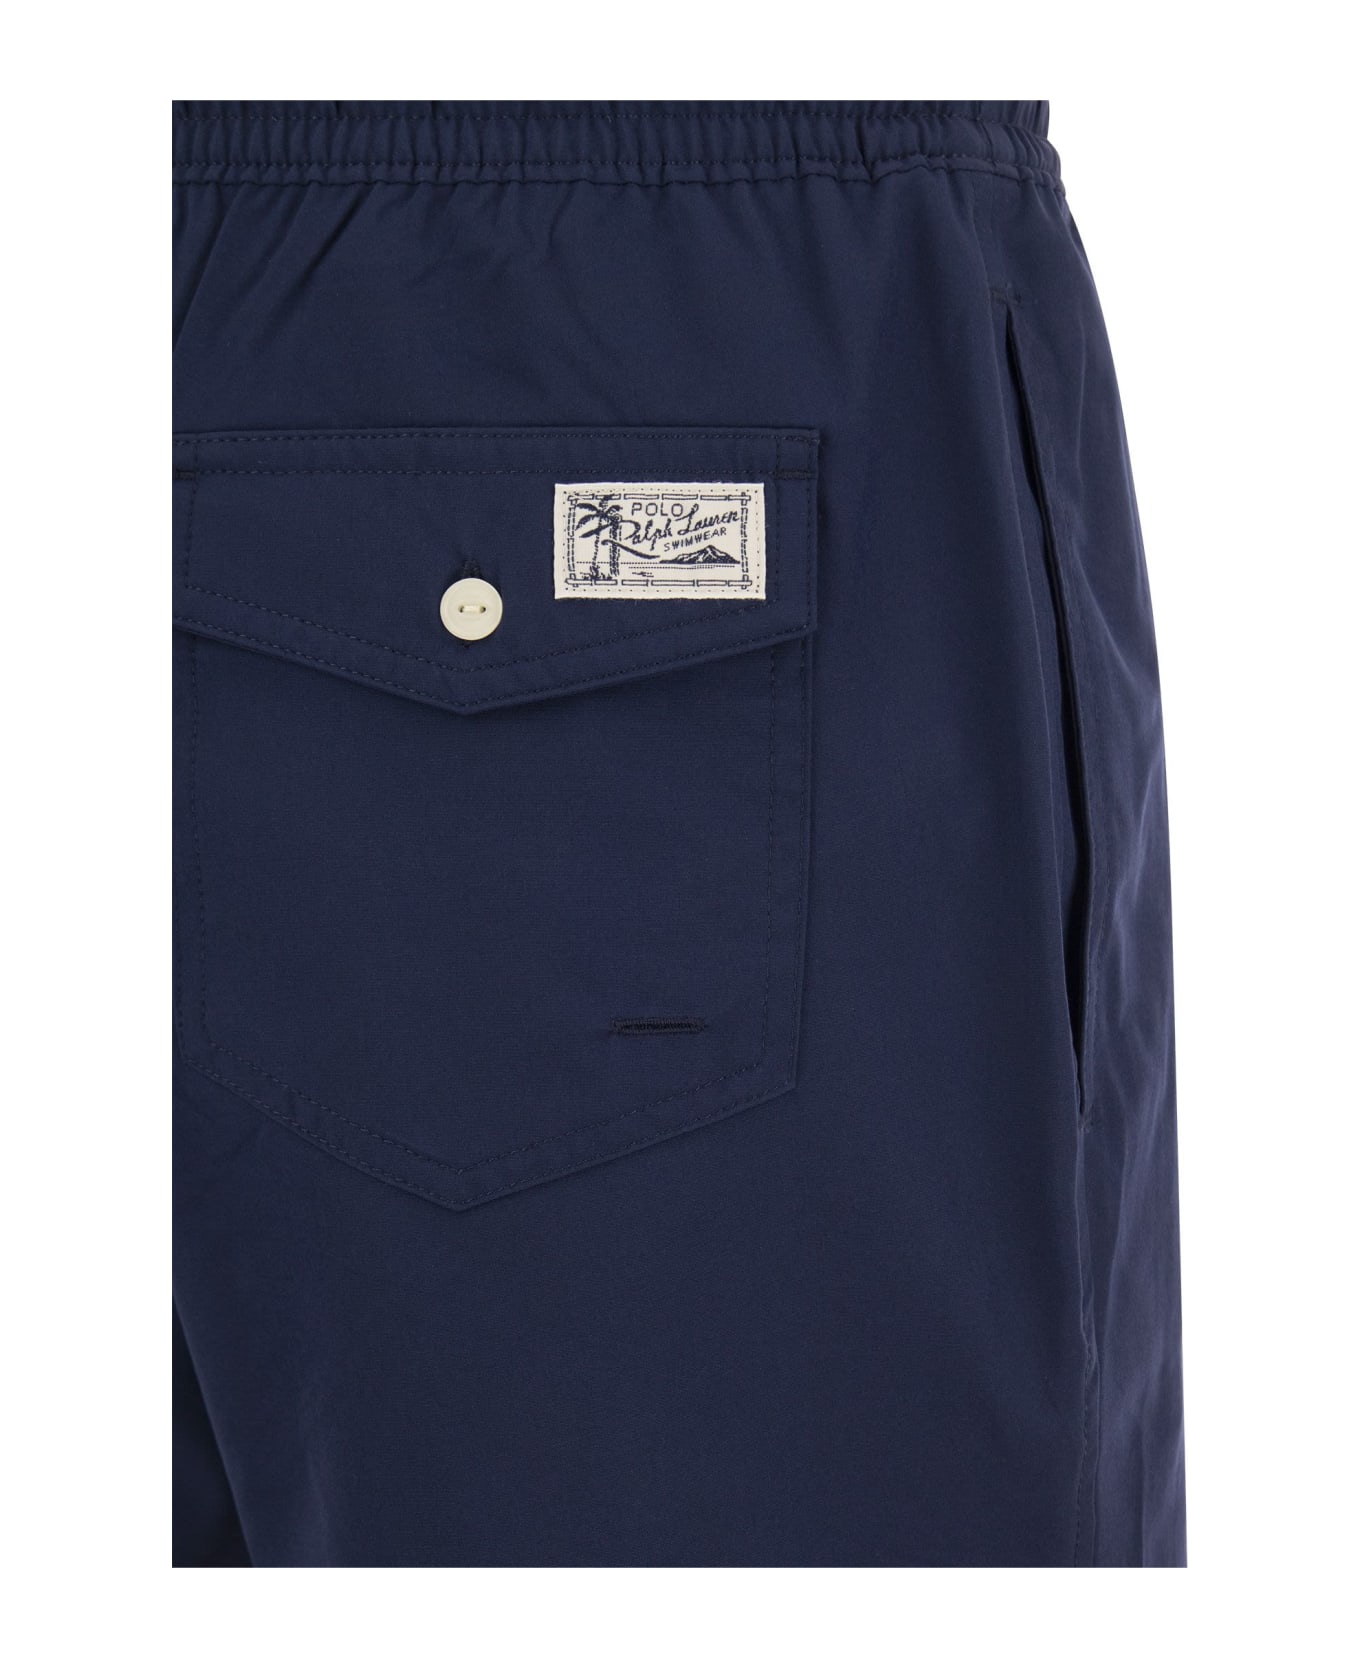 Ralph Lauren Navy Blue Swim Shorts With Embroidered Pony - Blu